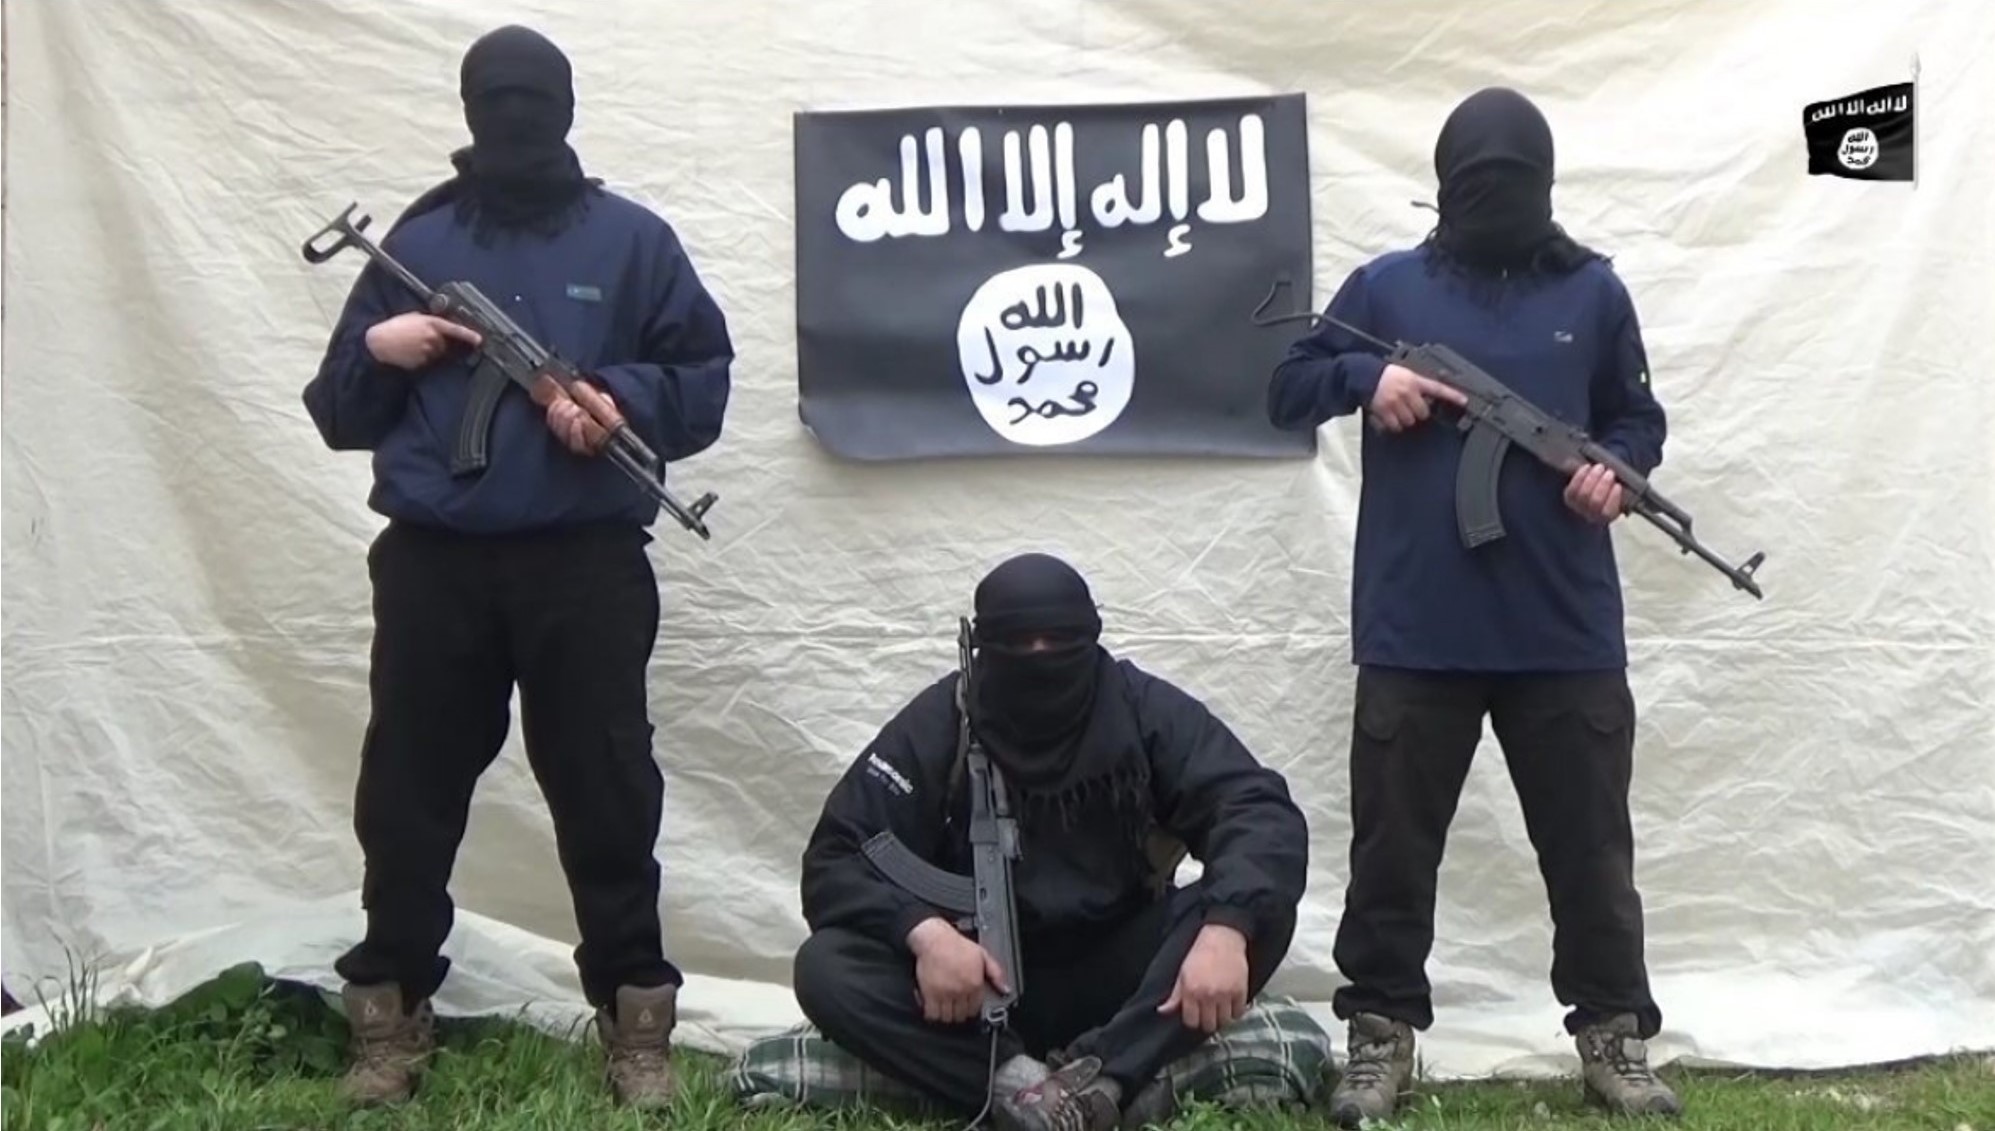 Screenshot from the IS pledge video involving Azerbaijan nationals advocating jihad and martyrdom